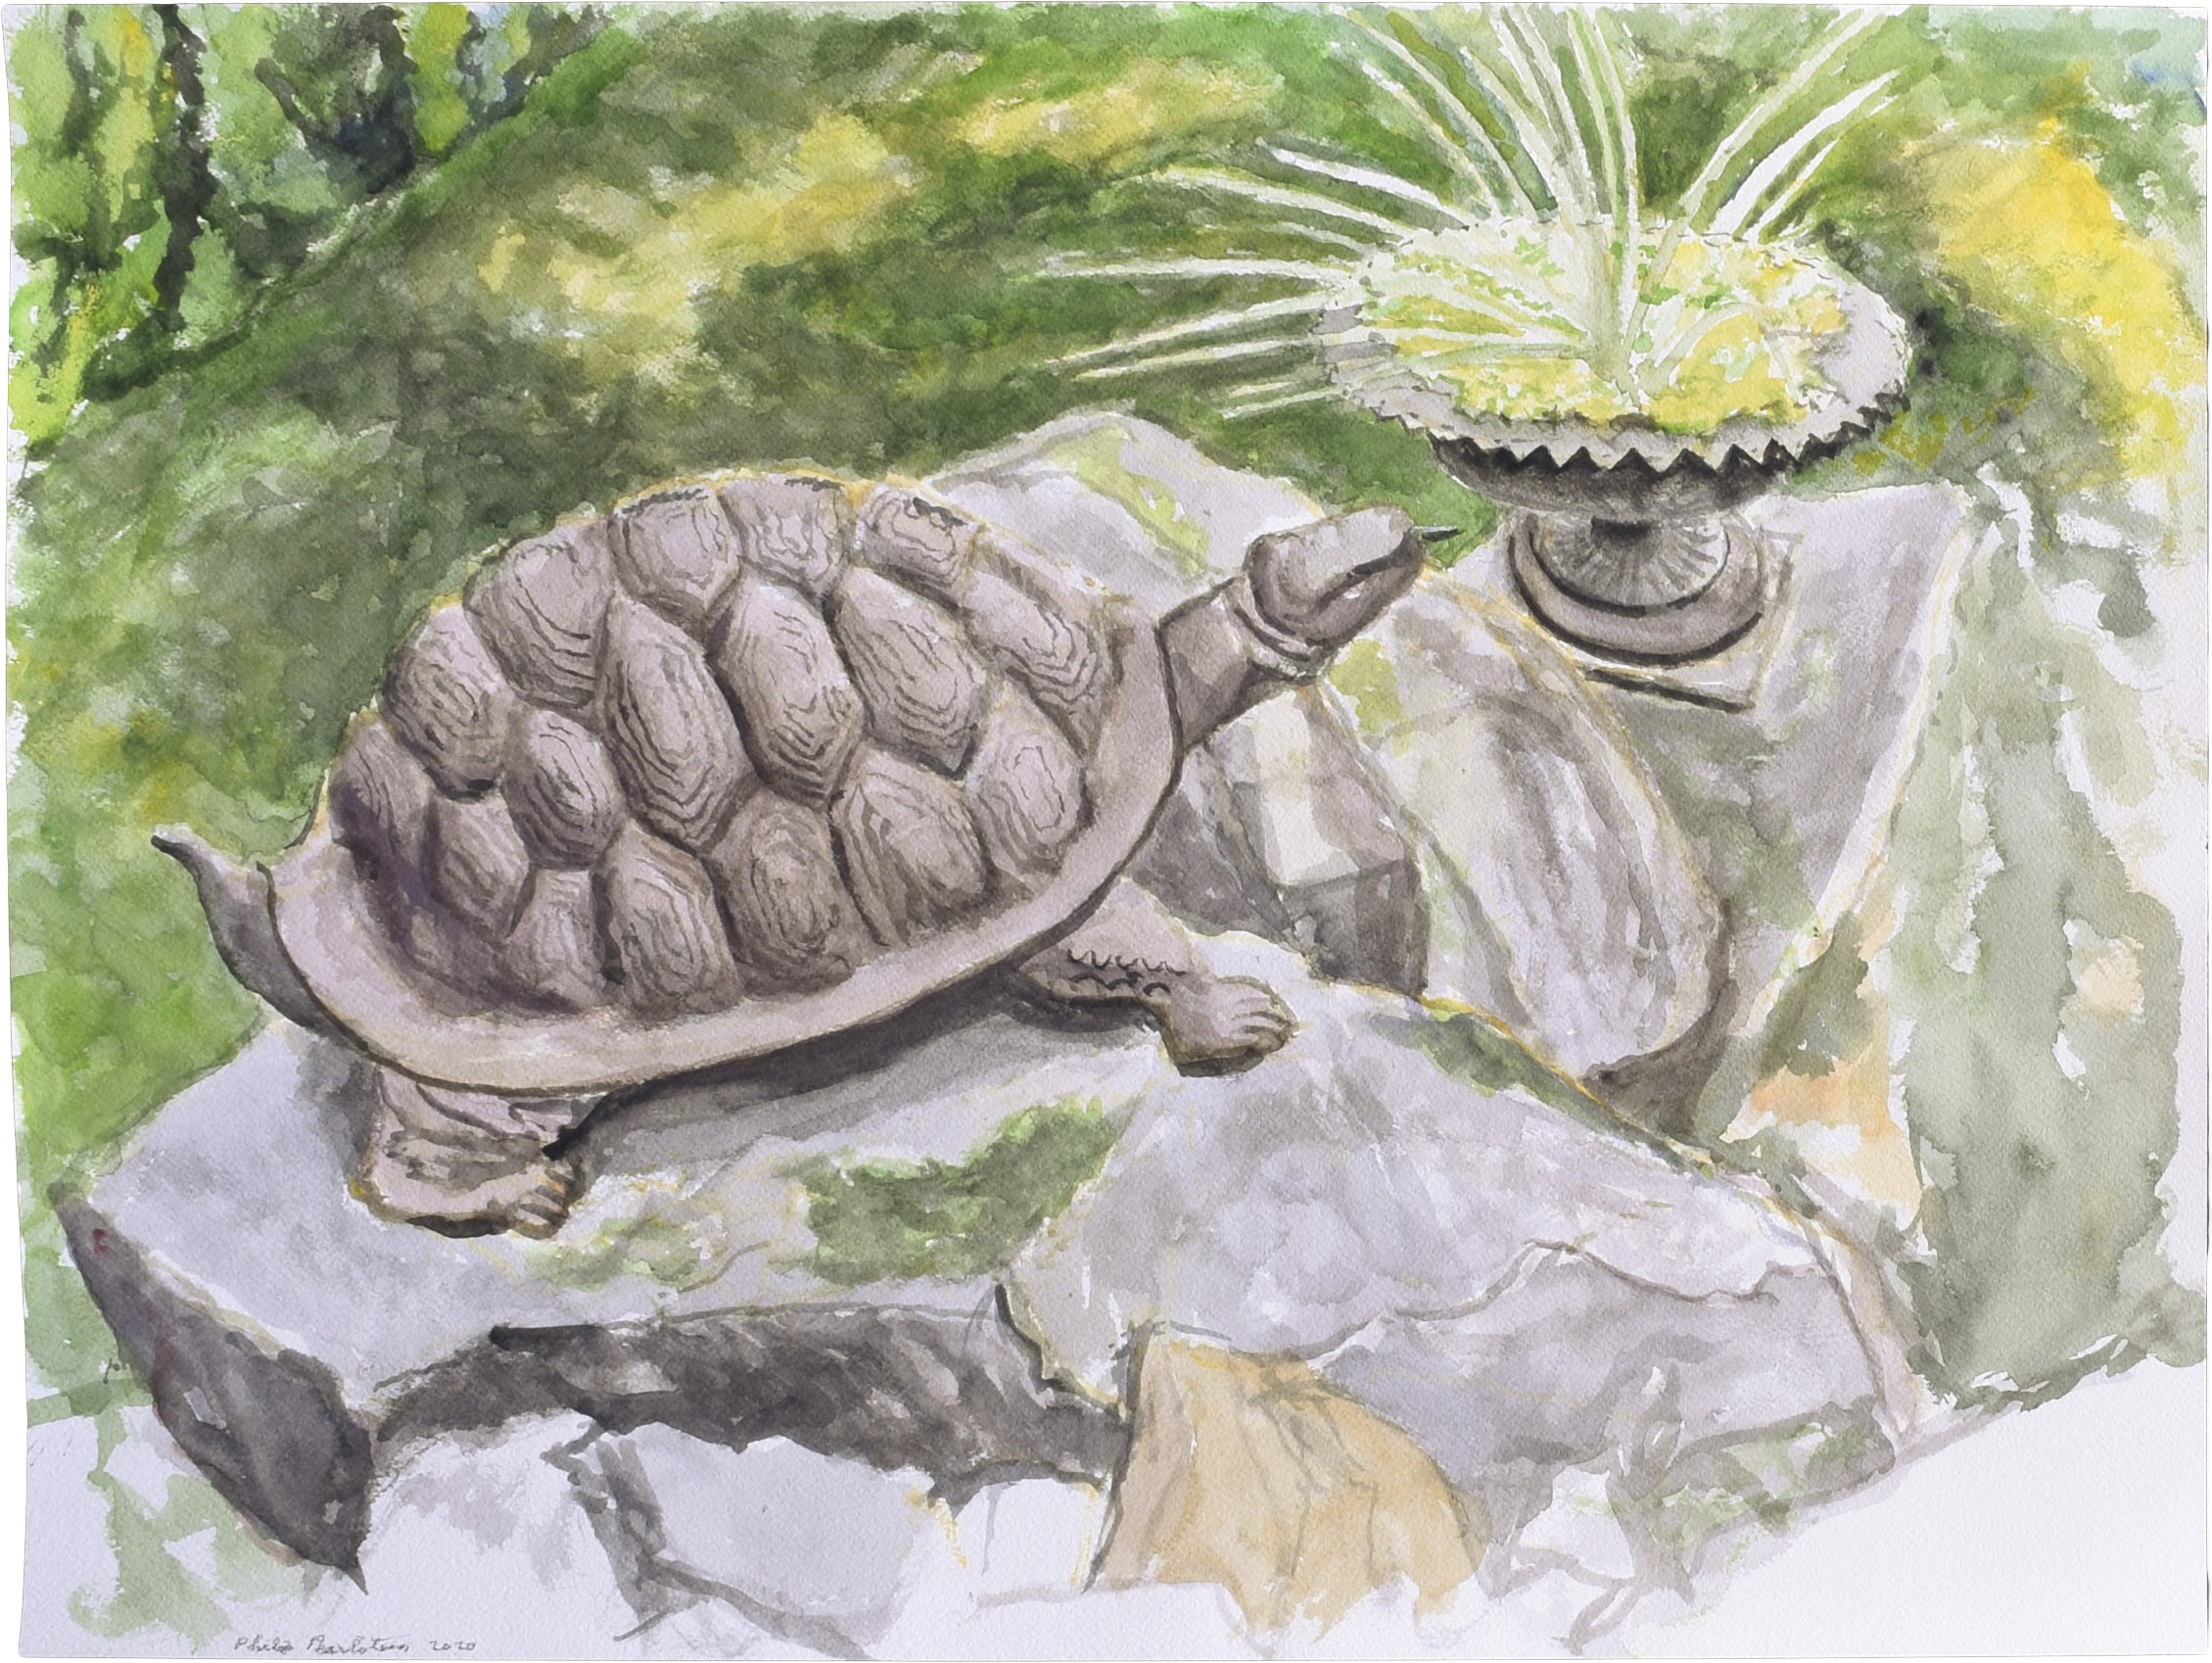 2021 Cast Iron Sprinkler Turtle in My Garden Watercolor on Paper 18 x 24 PP16821